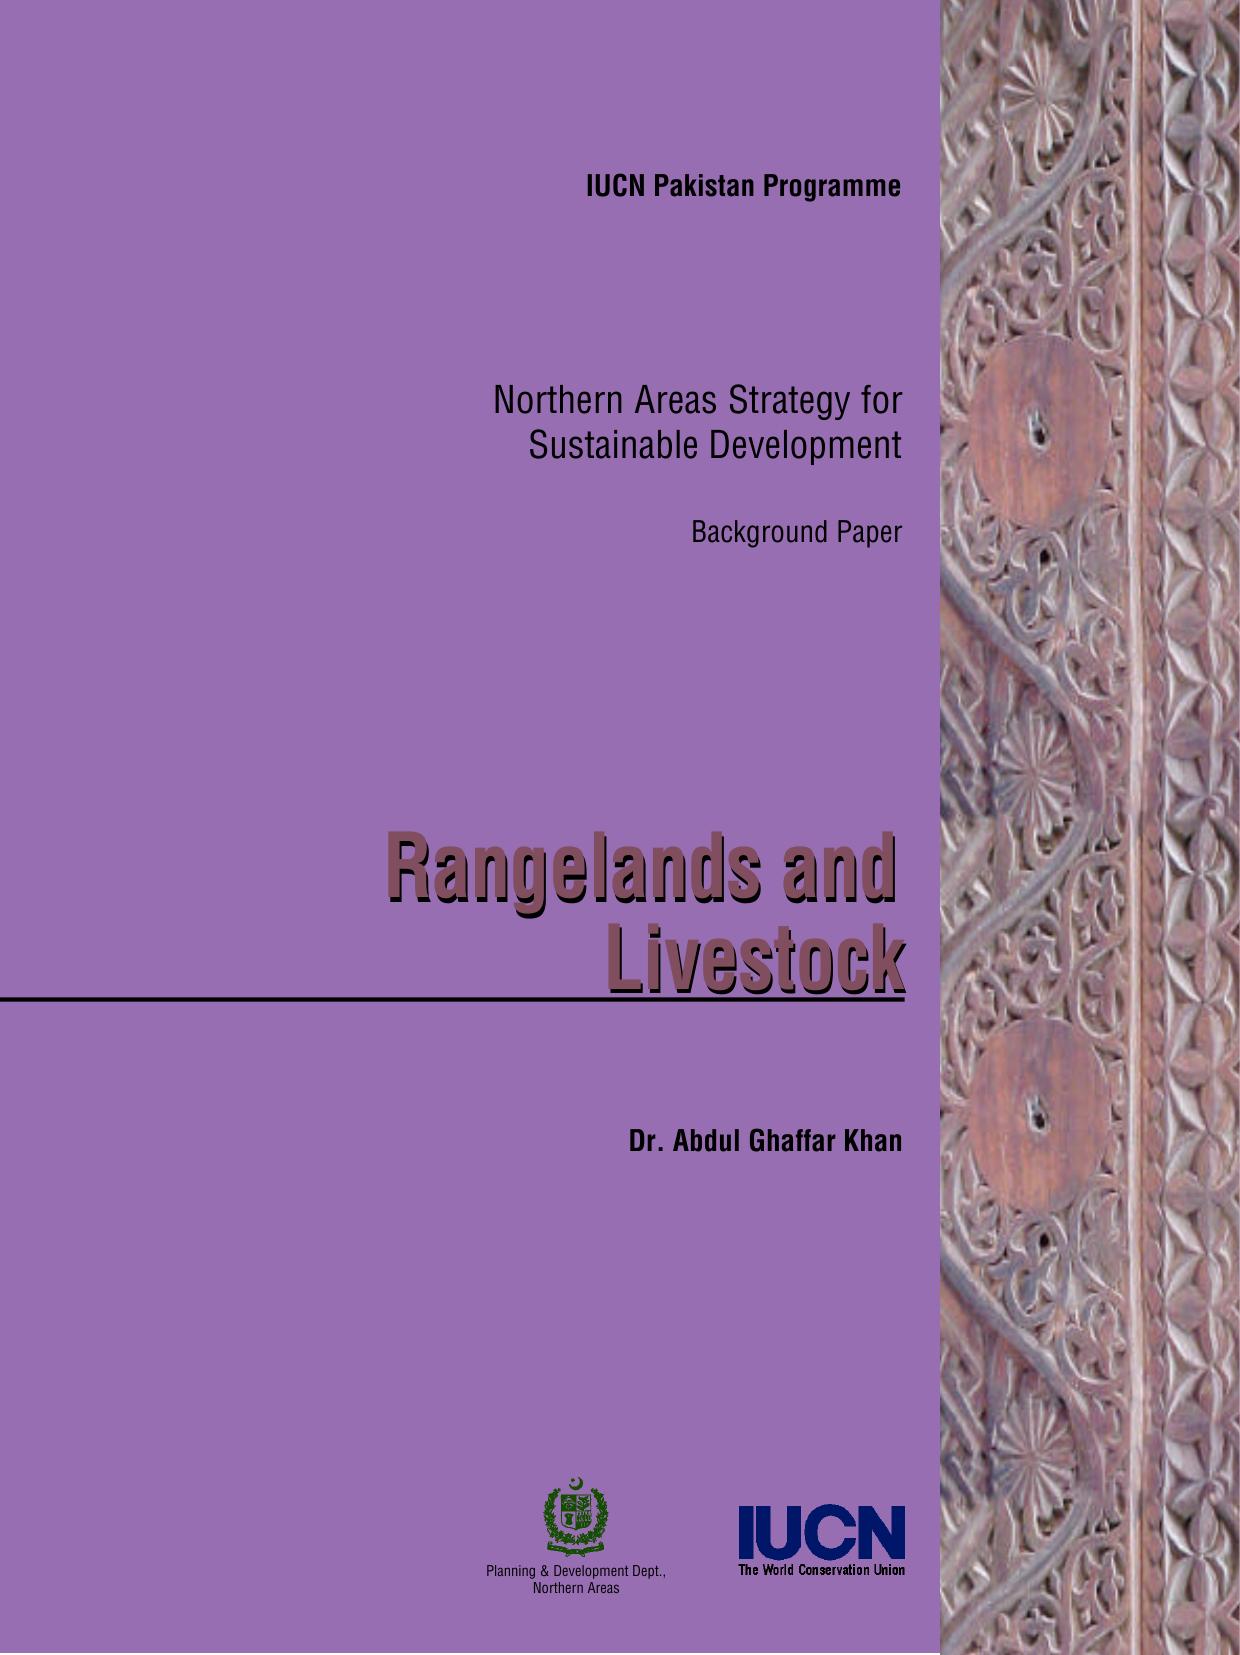 Rangelands and livestock. 2003